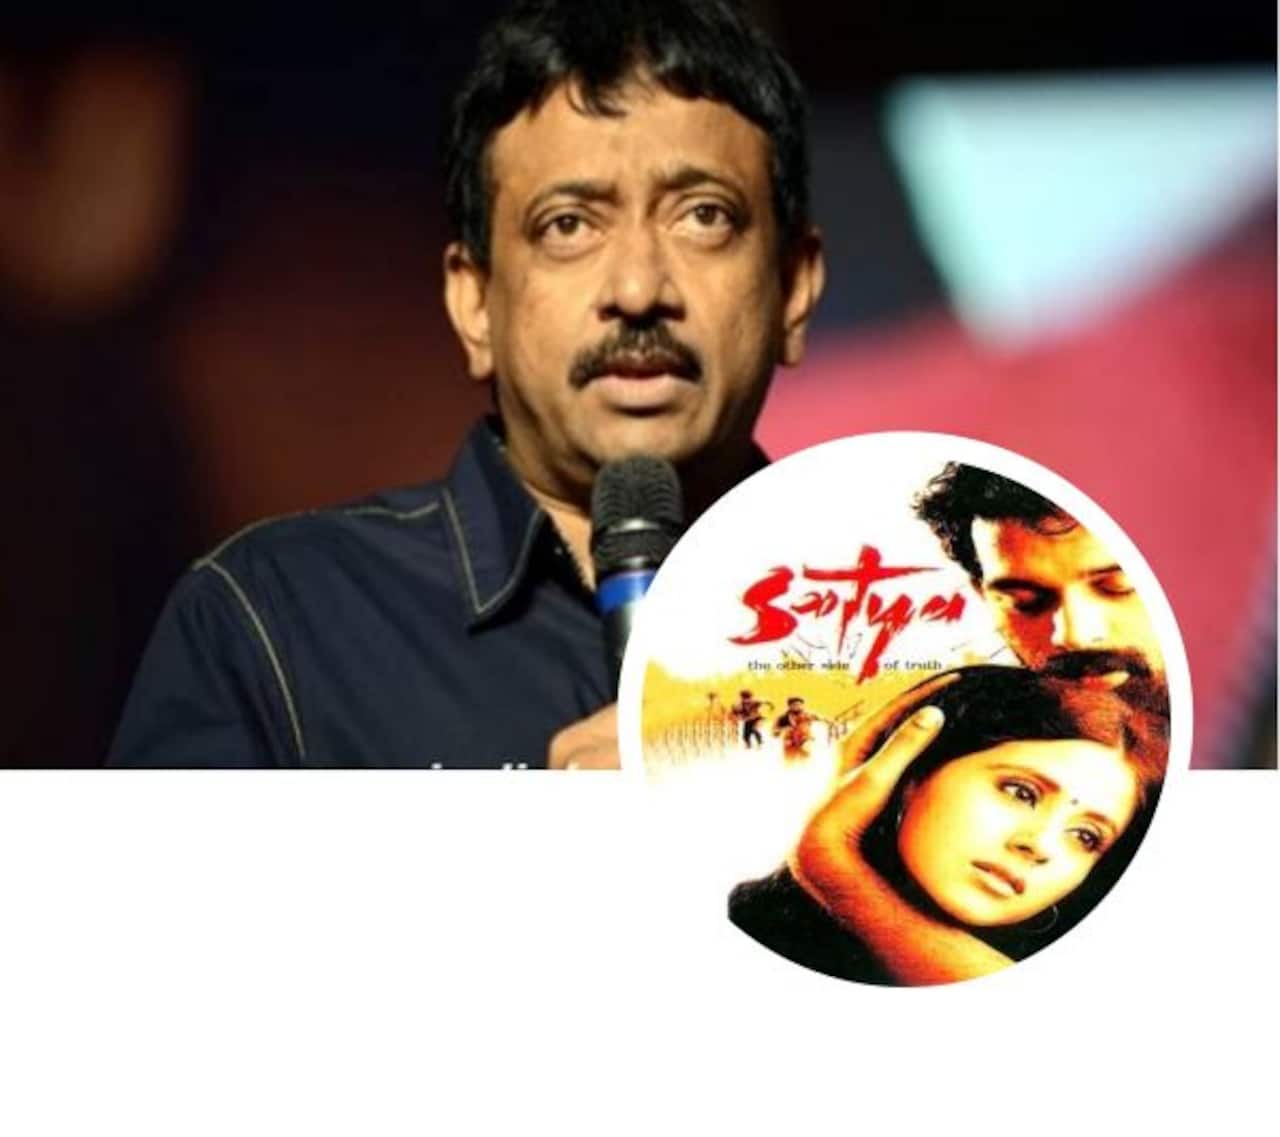 On Satya's 20th anniversary, Ram Gopal Varma calls the film an 'Accident'